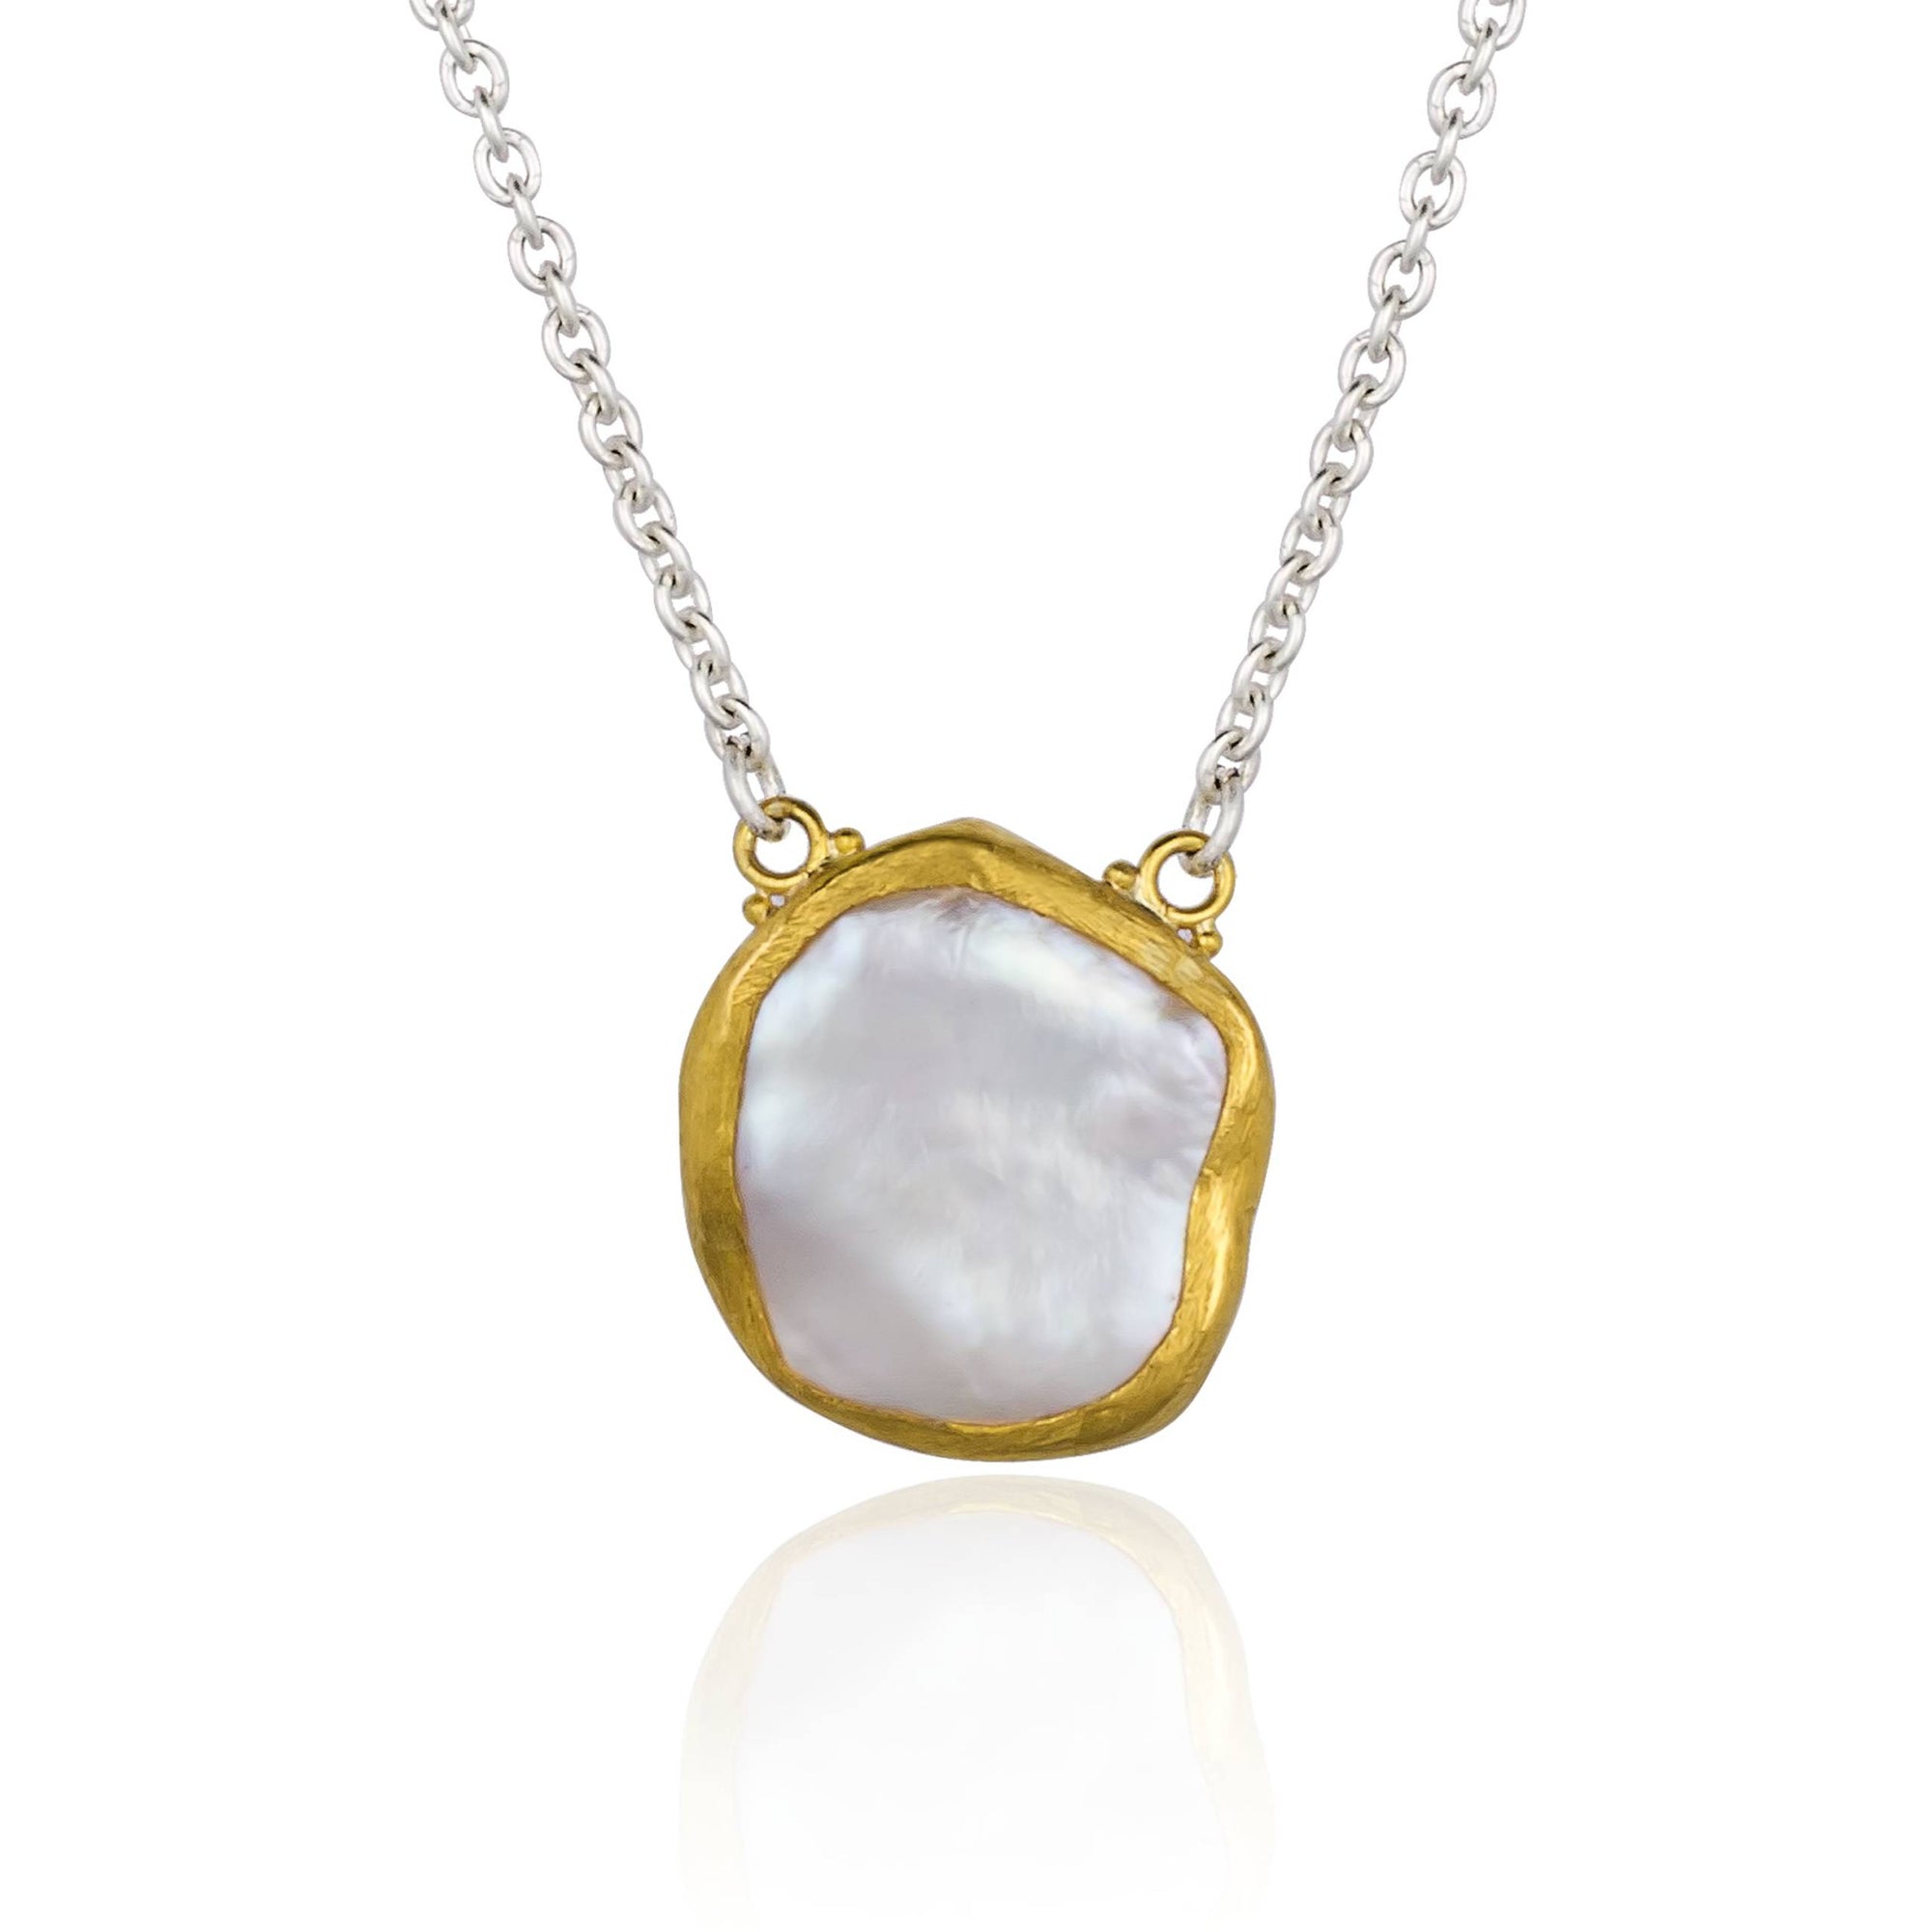 Lika Behar 24K Gold & Sterling Silver “Rosalie” Keshi Pearl Necklace